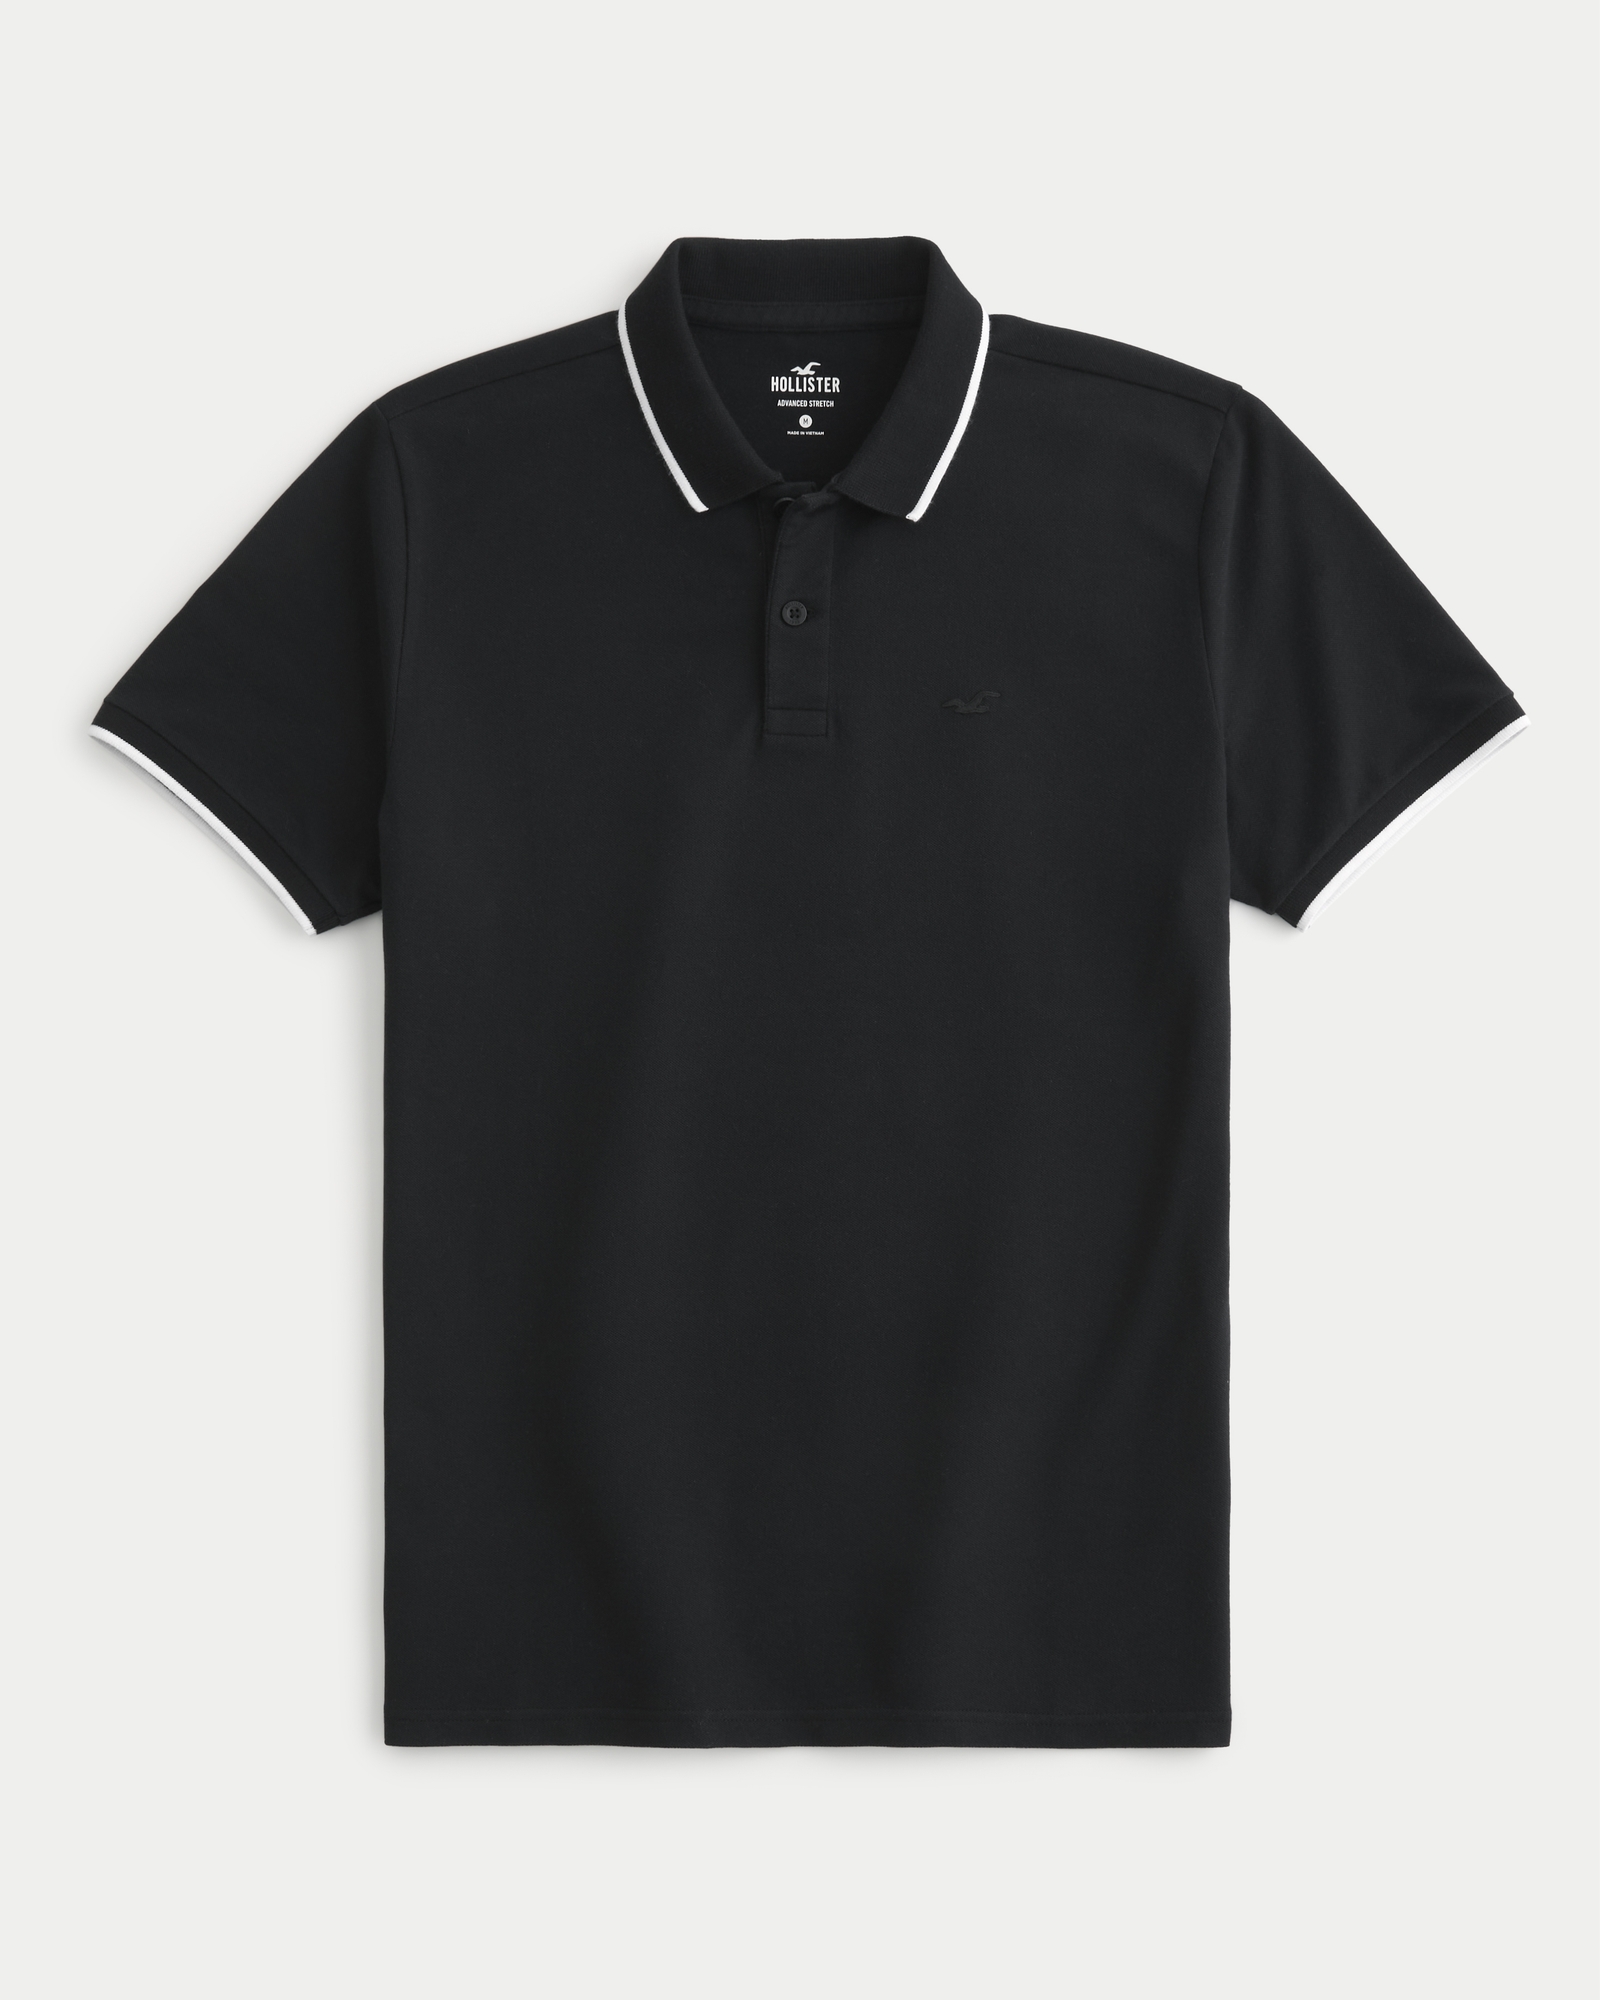 Hollister varsity logo tipping pique polo in black